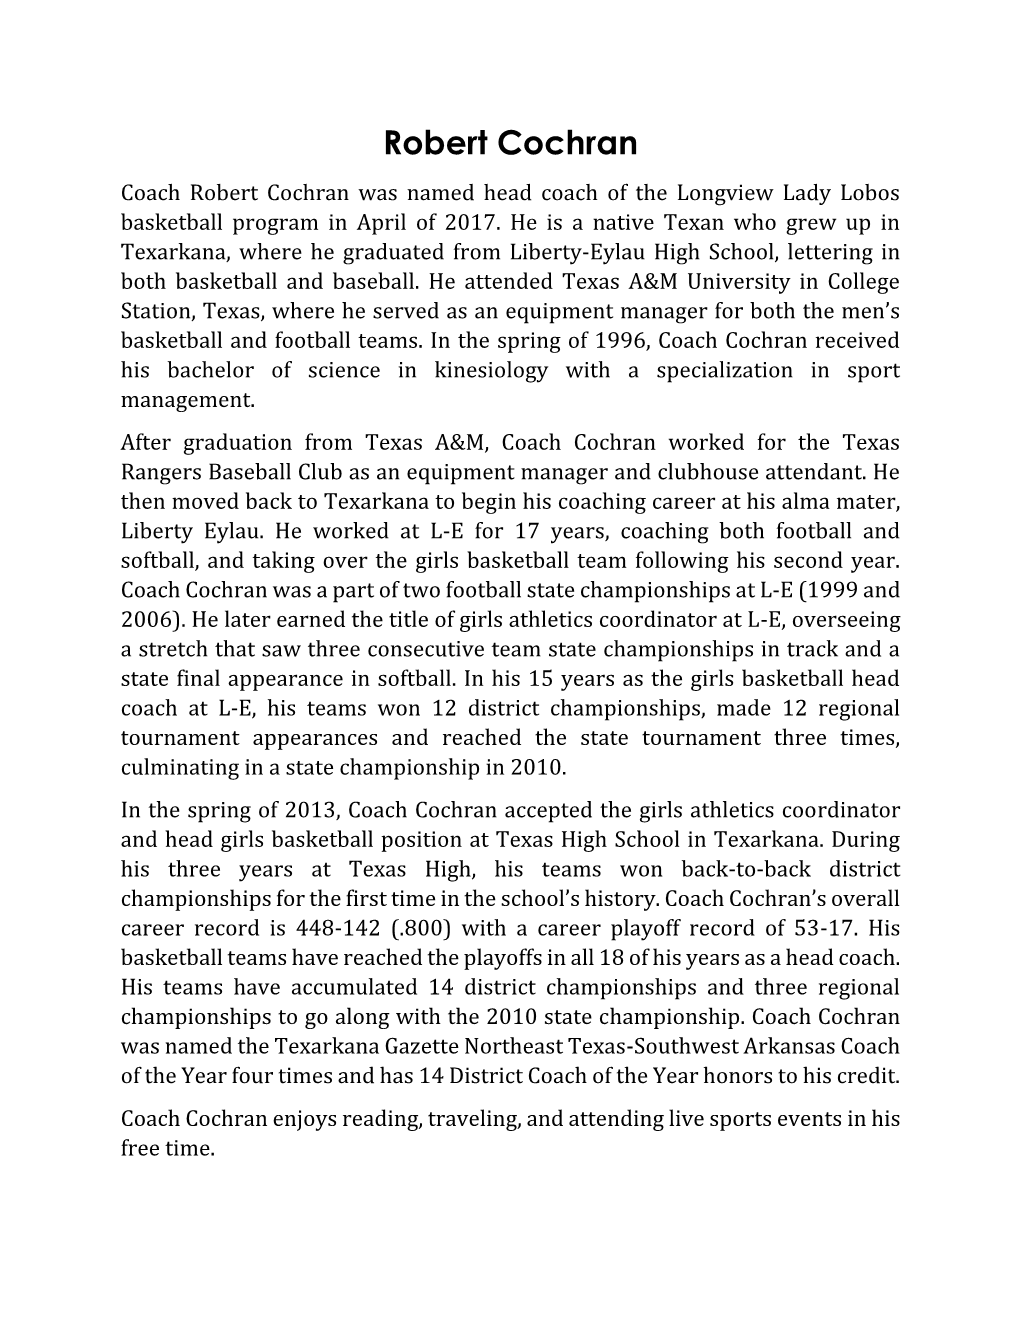 Robert Cochran Coach Robert Cochran Was Named Head Coach of the Longview Lady Lobos Basketball Program in April of 2017